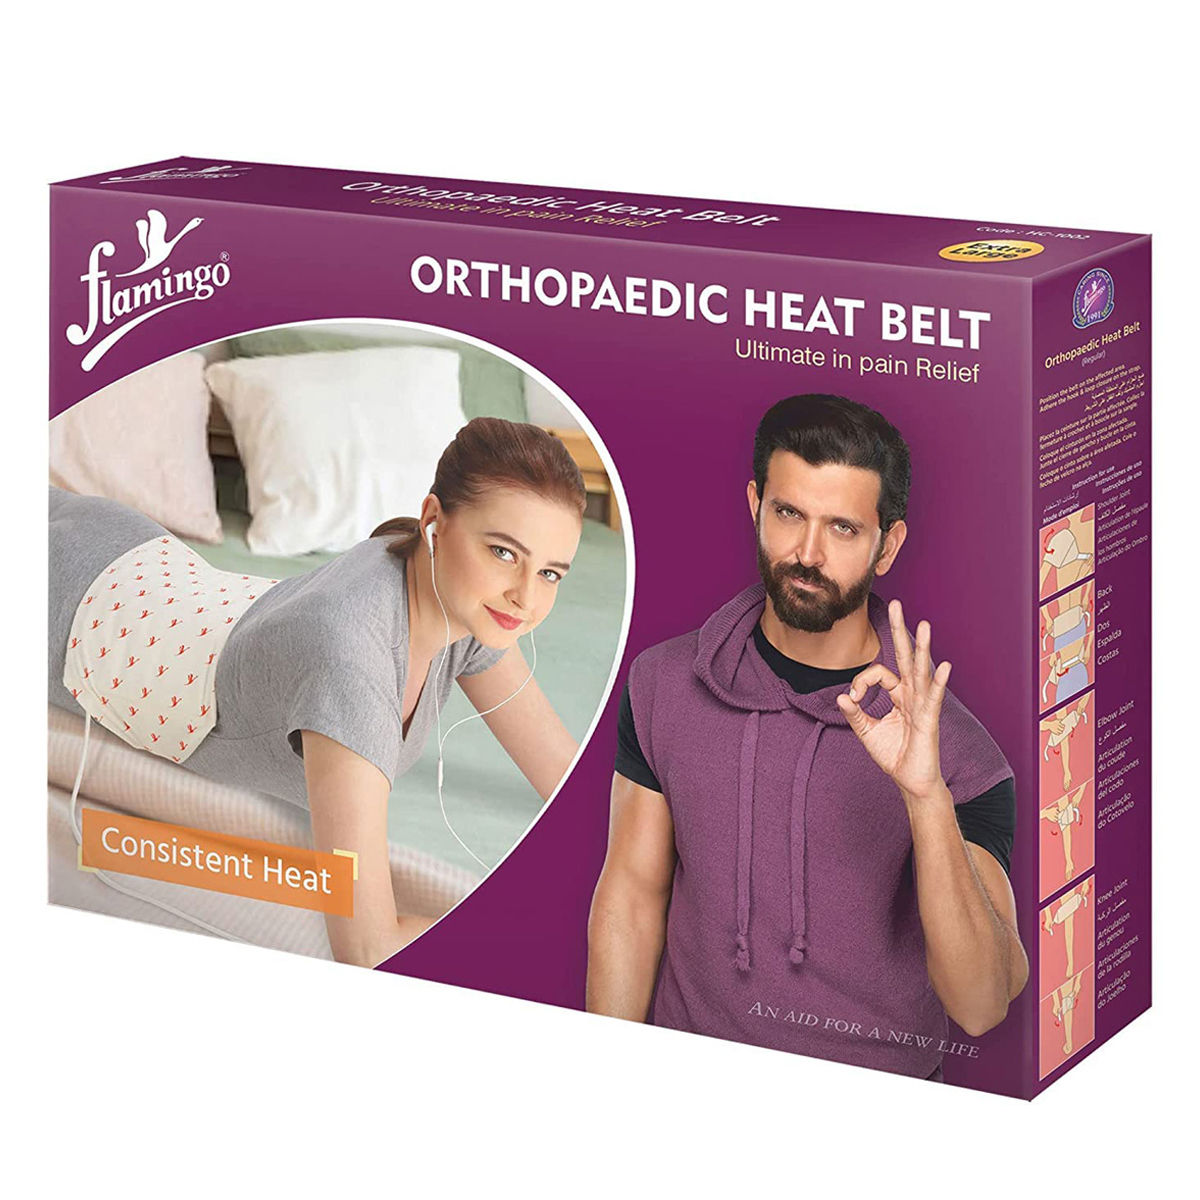 Buy Flamingo Orthopaedic Heat Belt XL, 1 Count Online